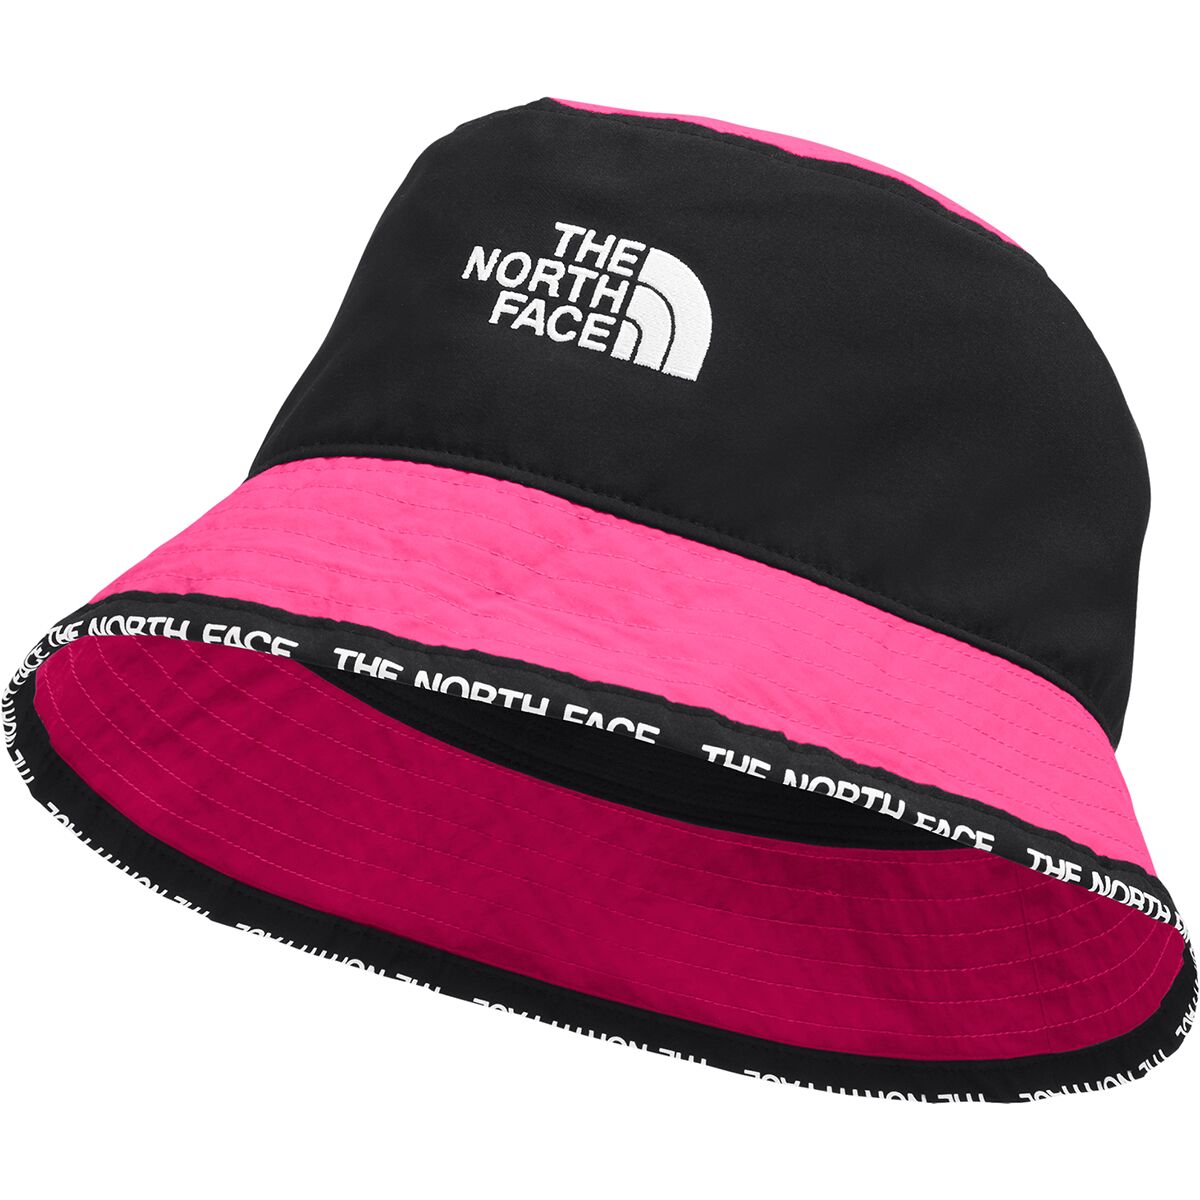 Кепка the North face розовая. Кепка женская розовая the North face. The North face Pink. Bucket hat с розовыми цепями. N hats